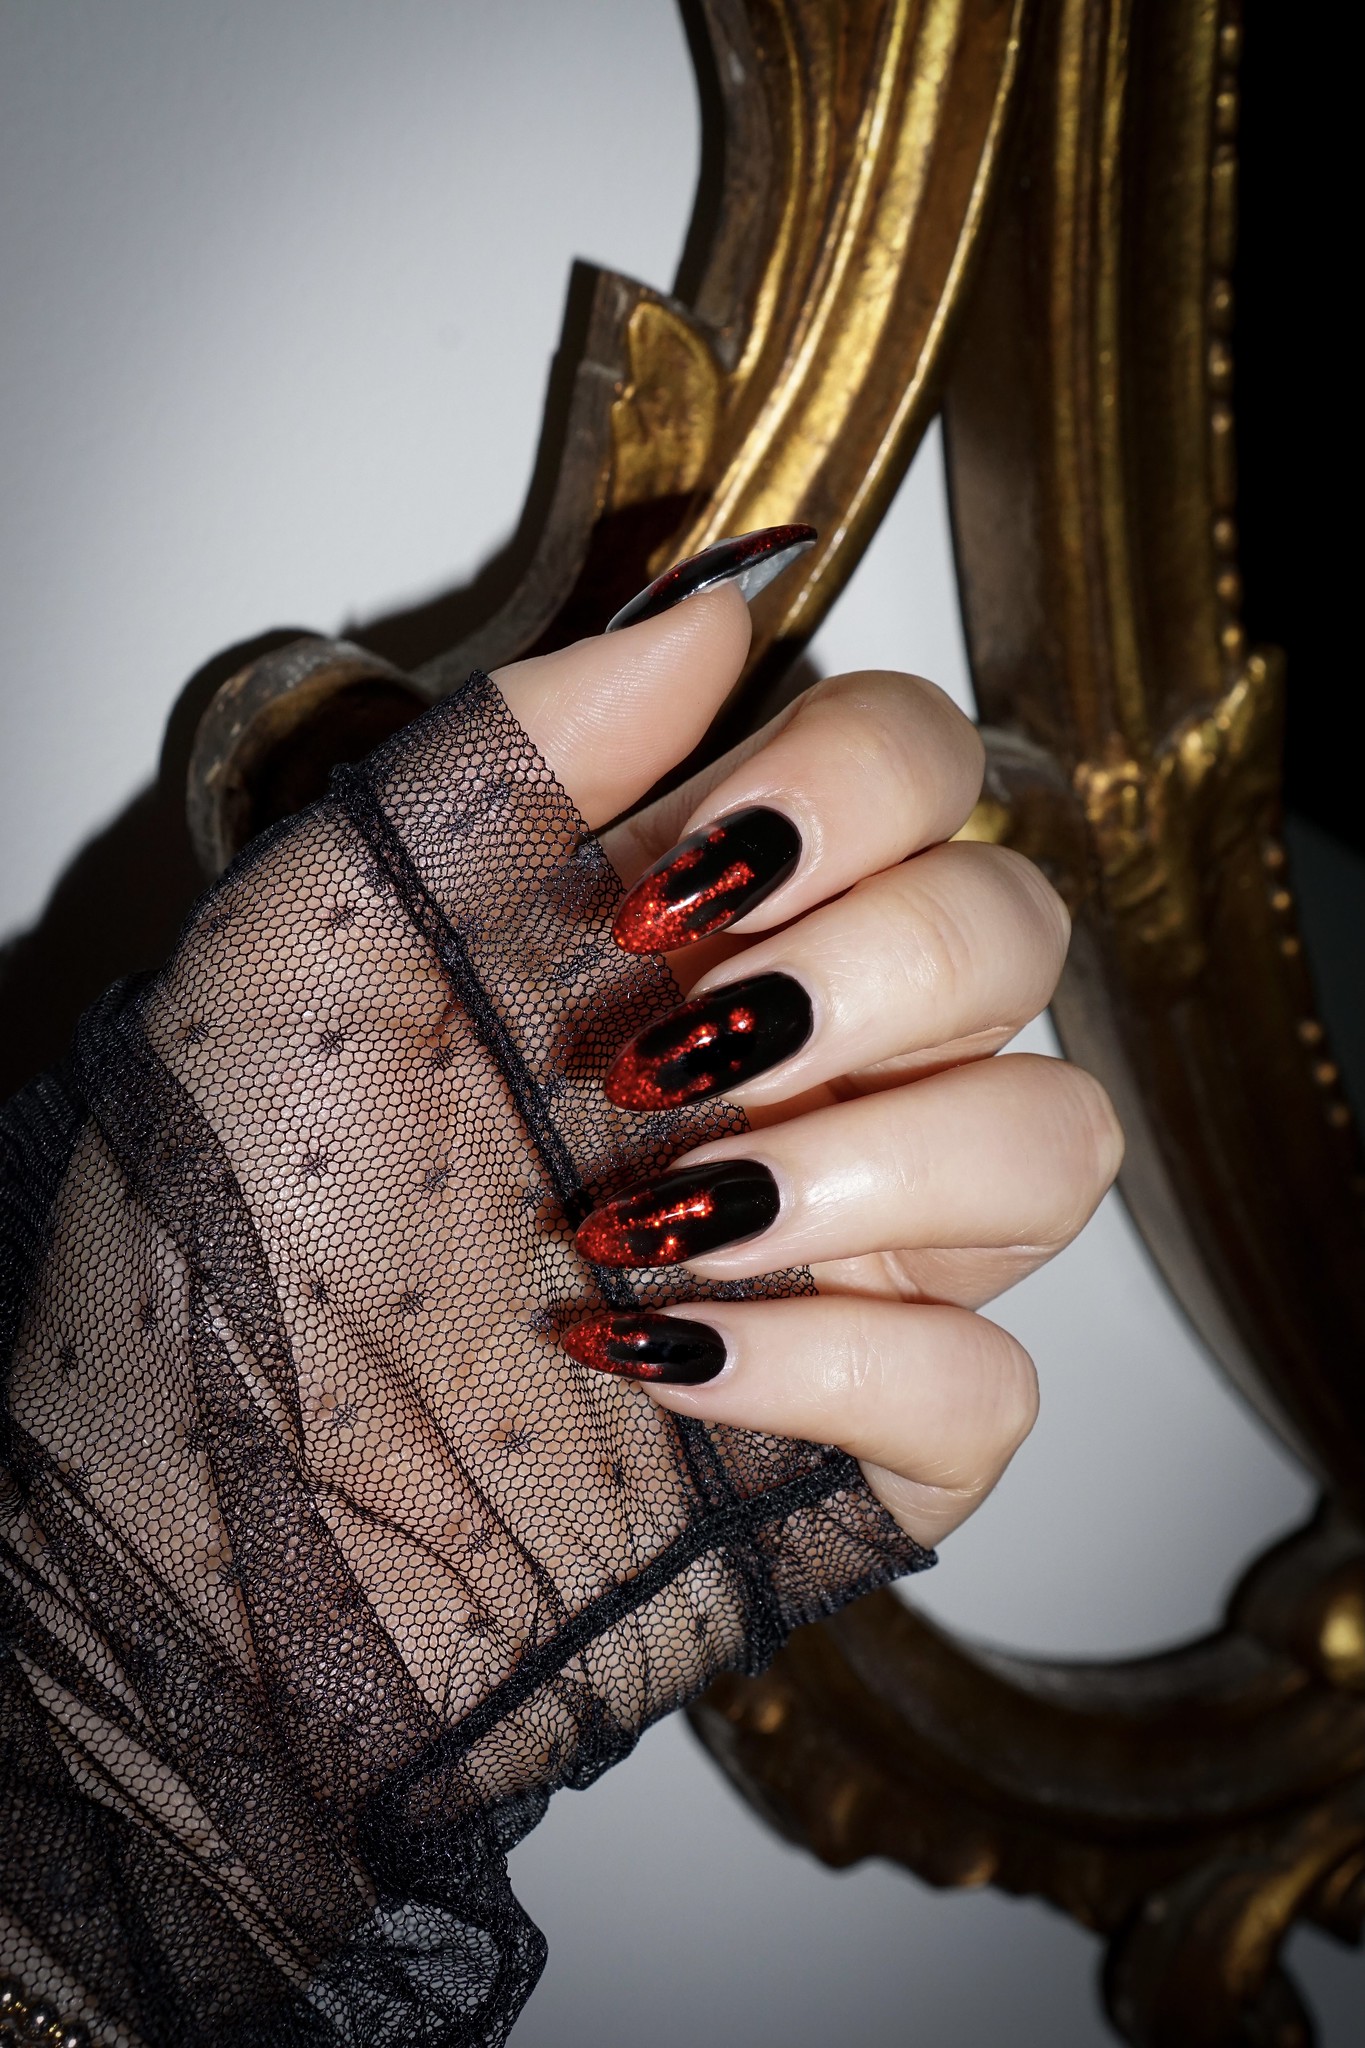 Nails by Sarah Astles - @purenailsuk Halo gel polish in Blood Red ❤️ .  @nailpictures @badnailgal @purenailsuk @scratchmagazine @nailpromagazine  @salonmagazine . . . #glamunicornnails #nailgame #nailfeature #showscratch  #wirralnailtech #wirralnails ...